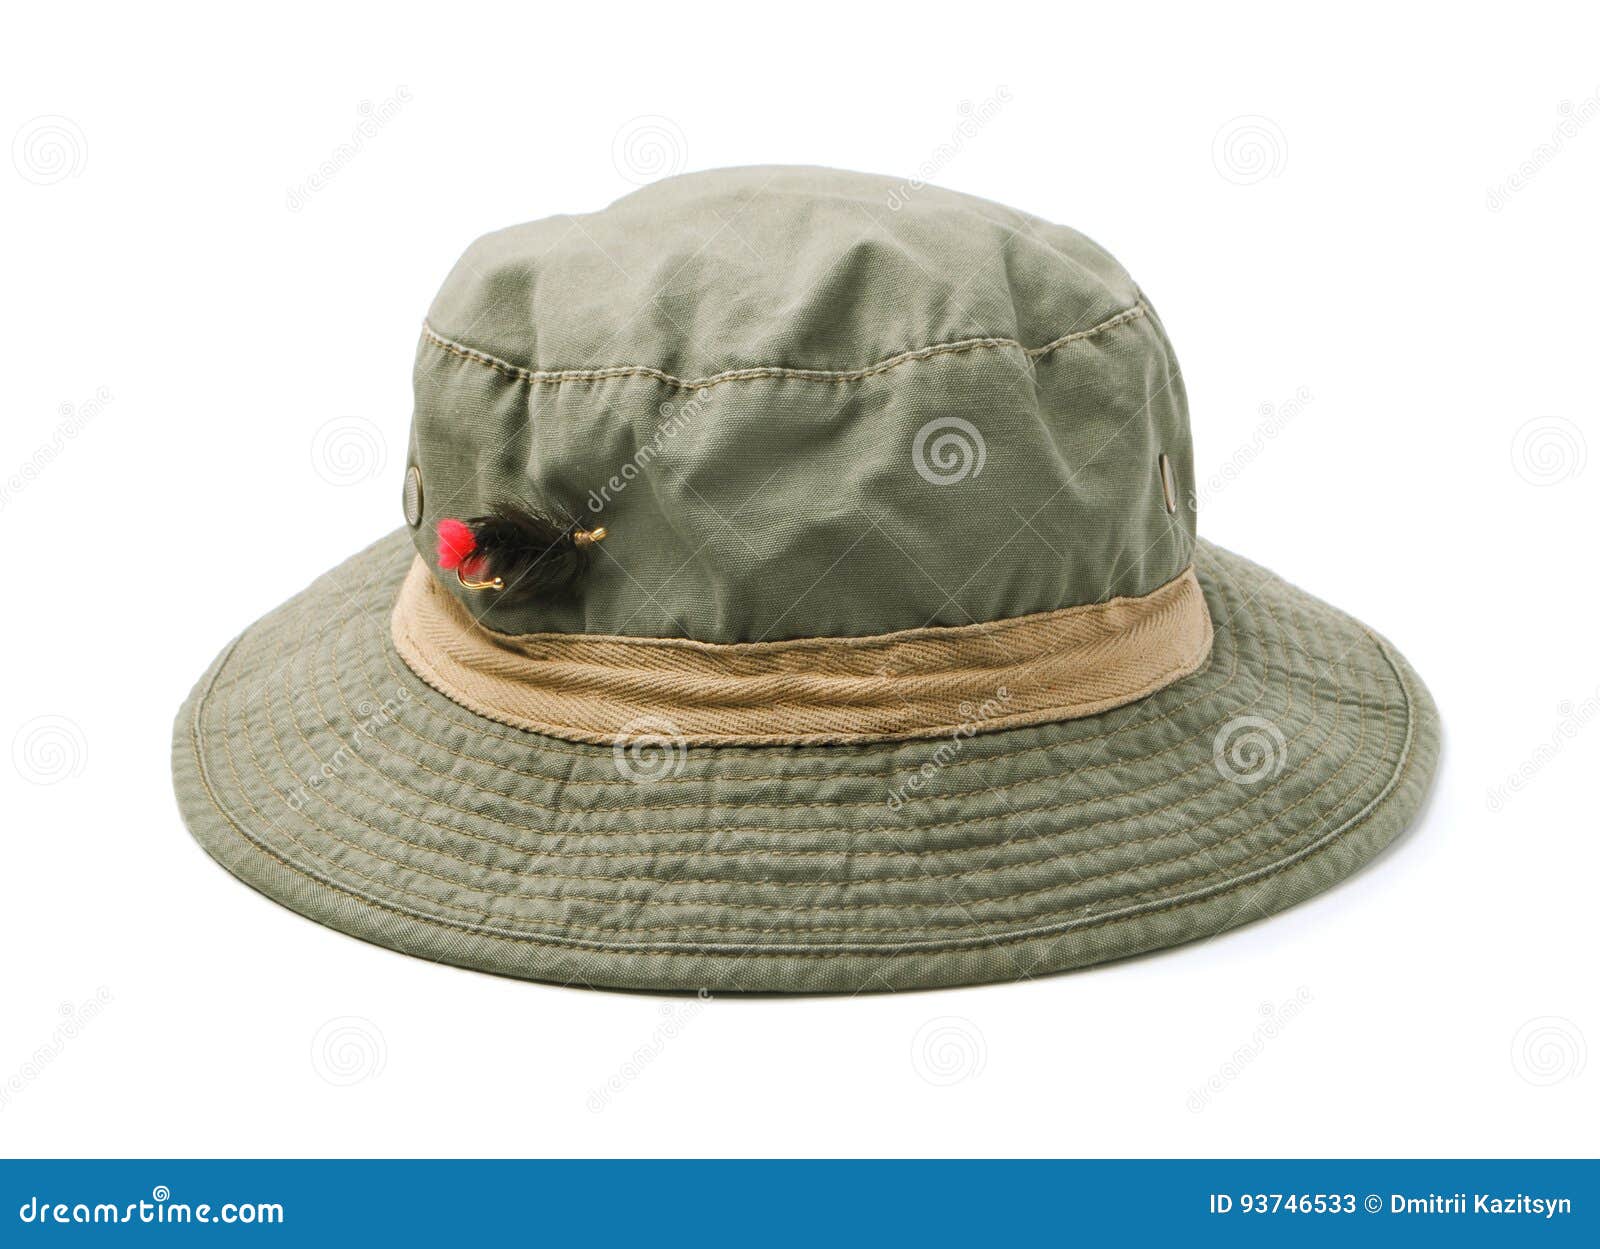 Fly fishing hat stock image. Image of fishing, pursuit - 93746533